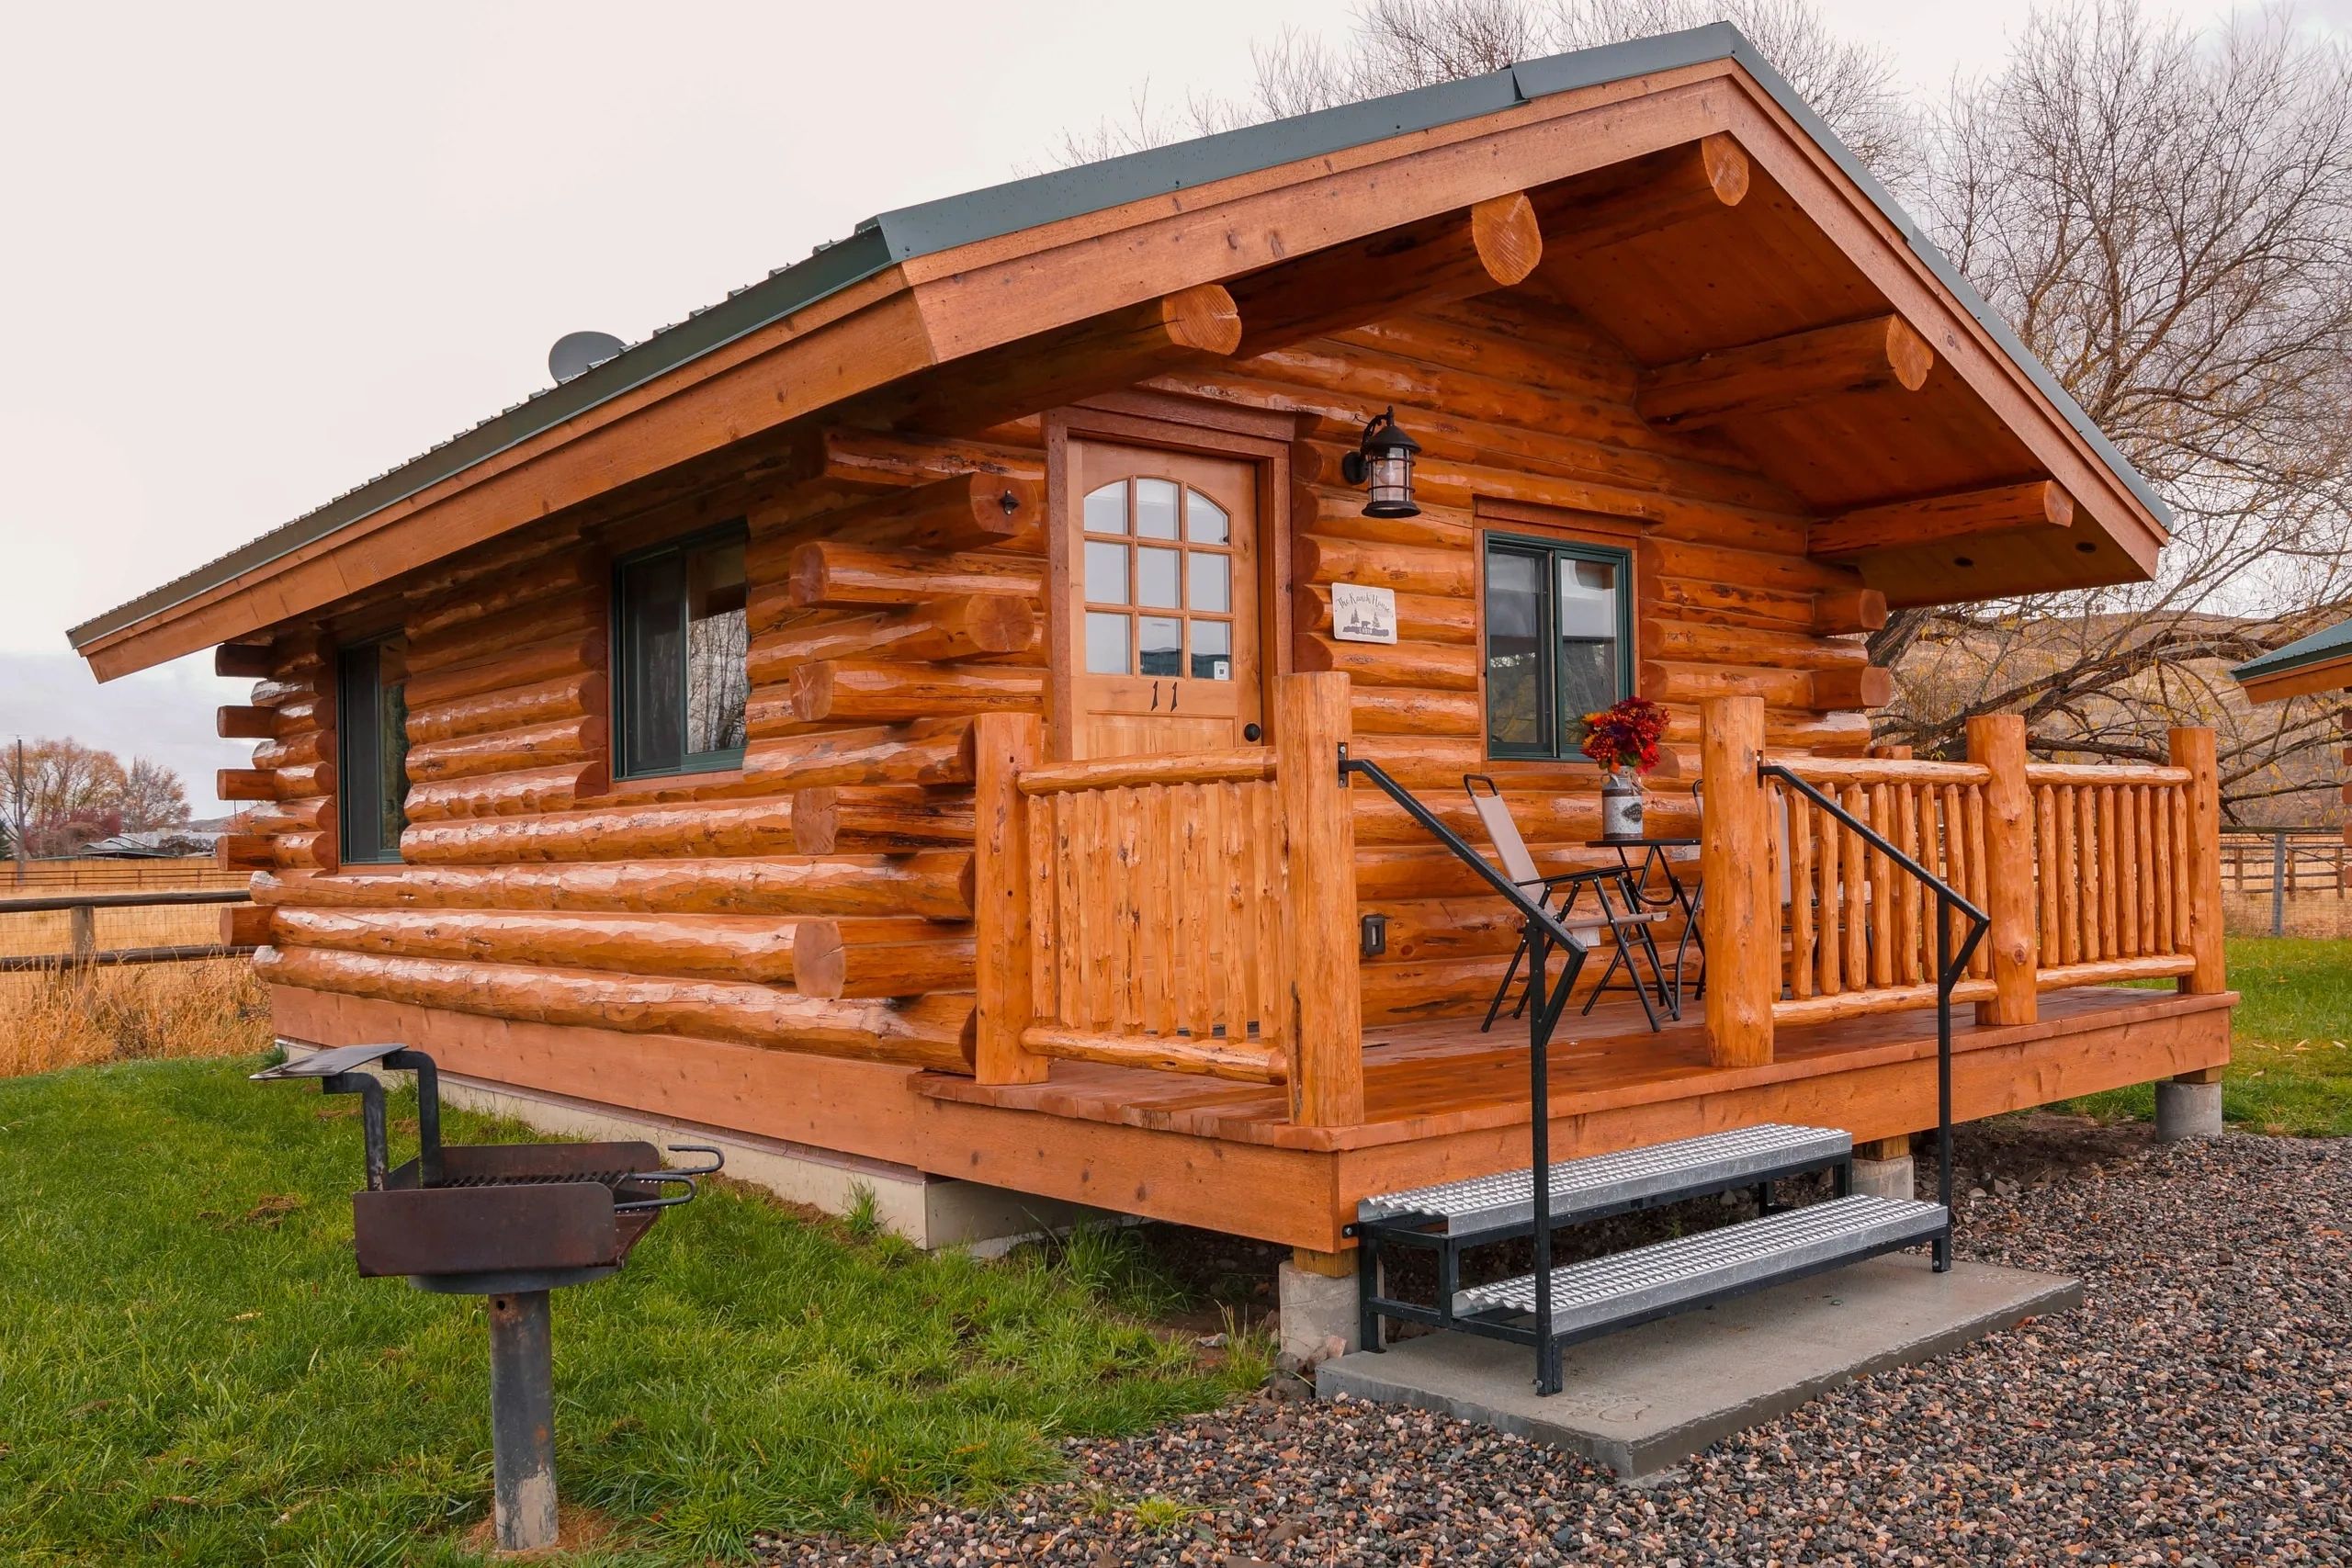 J & J Cabins - Hotel, Cabin Rentals, Vacation Rentals, Log Cabin